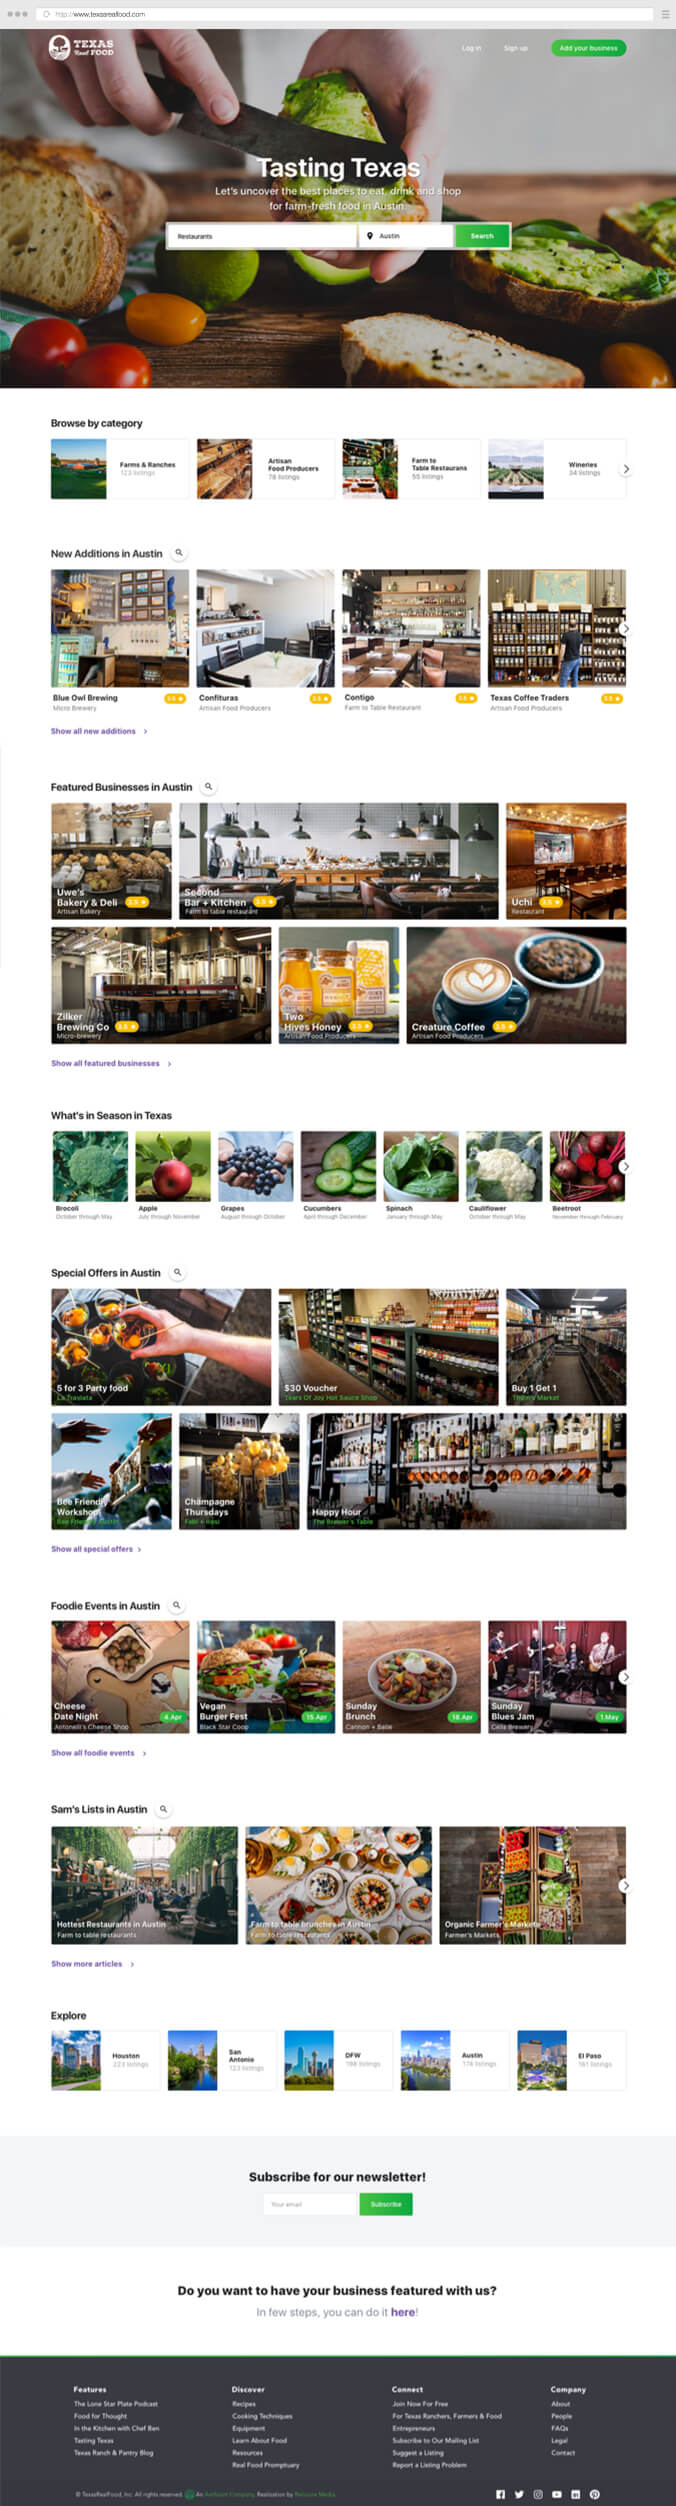 Texas Real Food Homepage Mock up